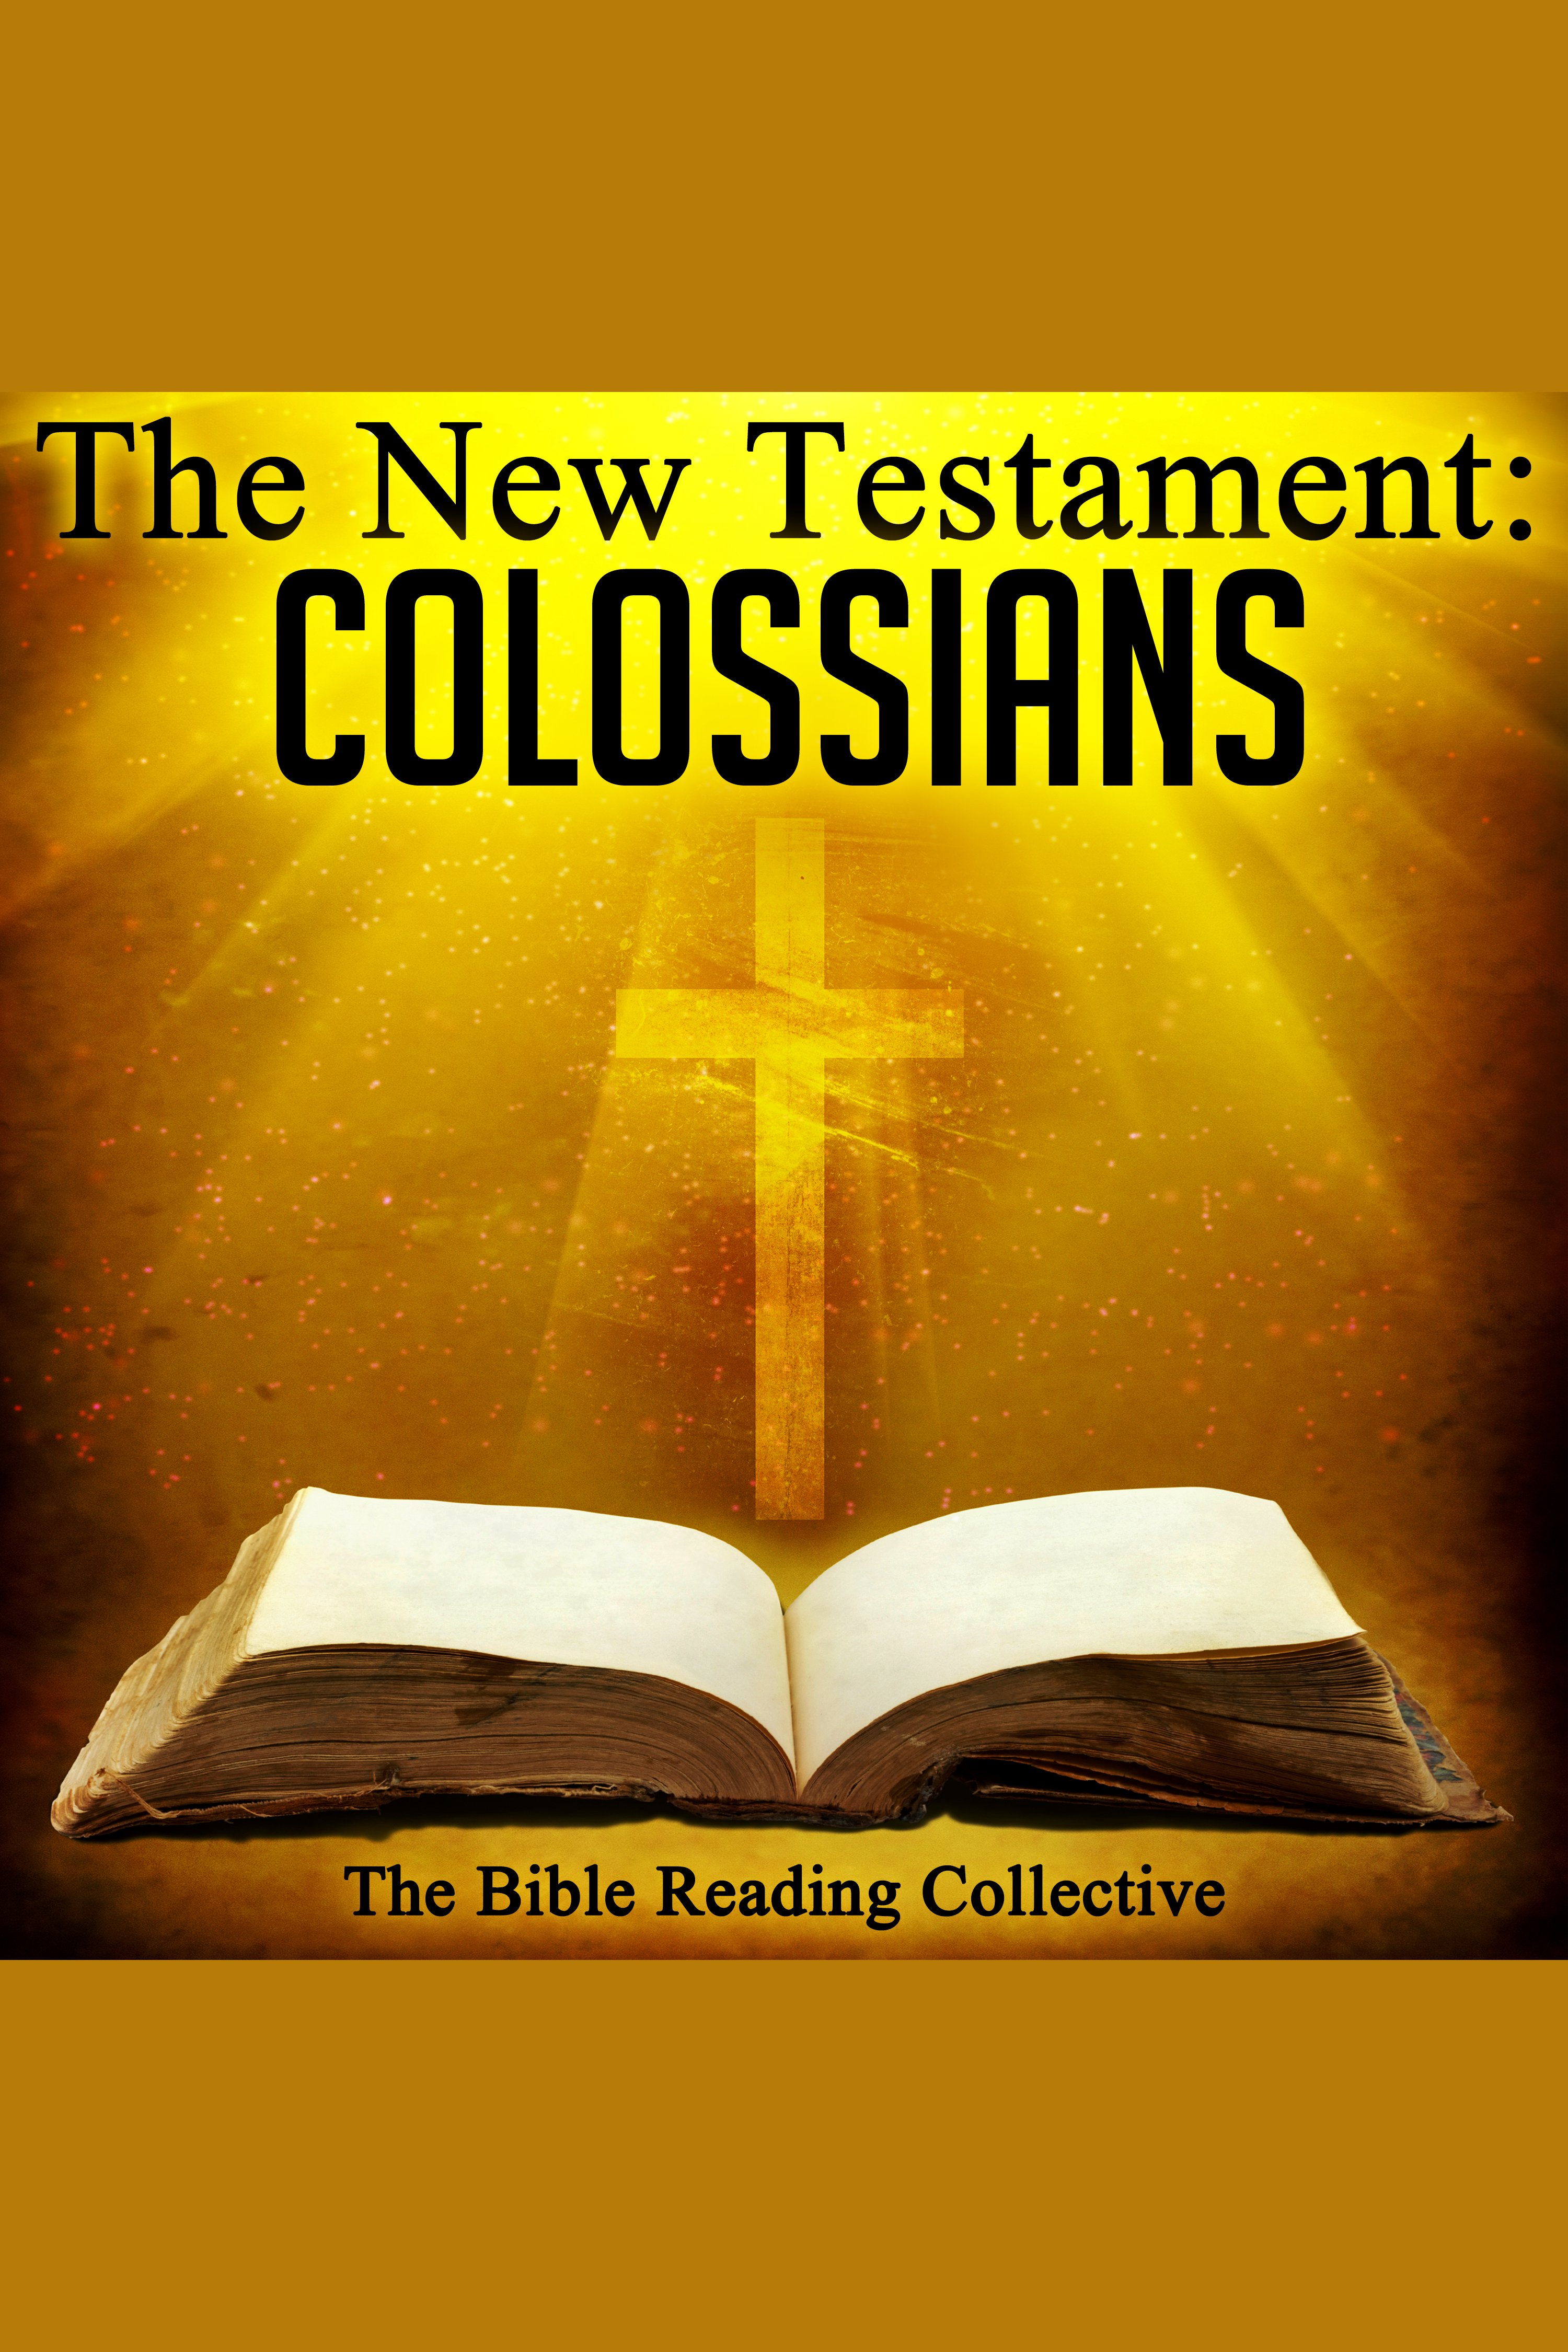 The New Testament: Colossians cover image